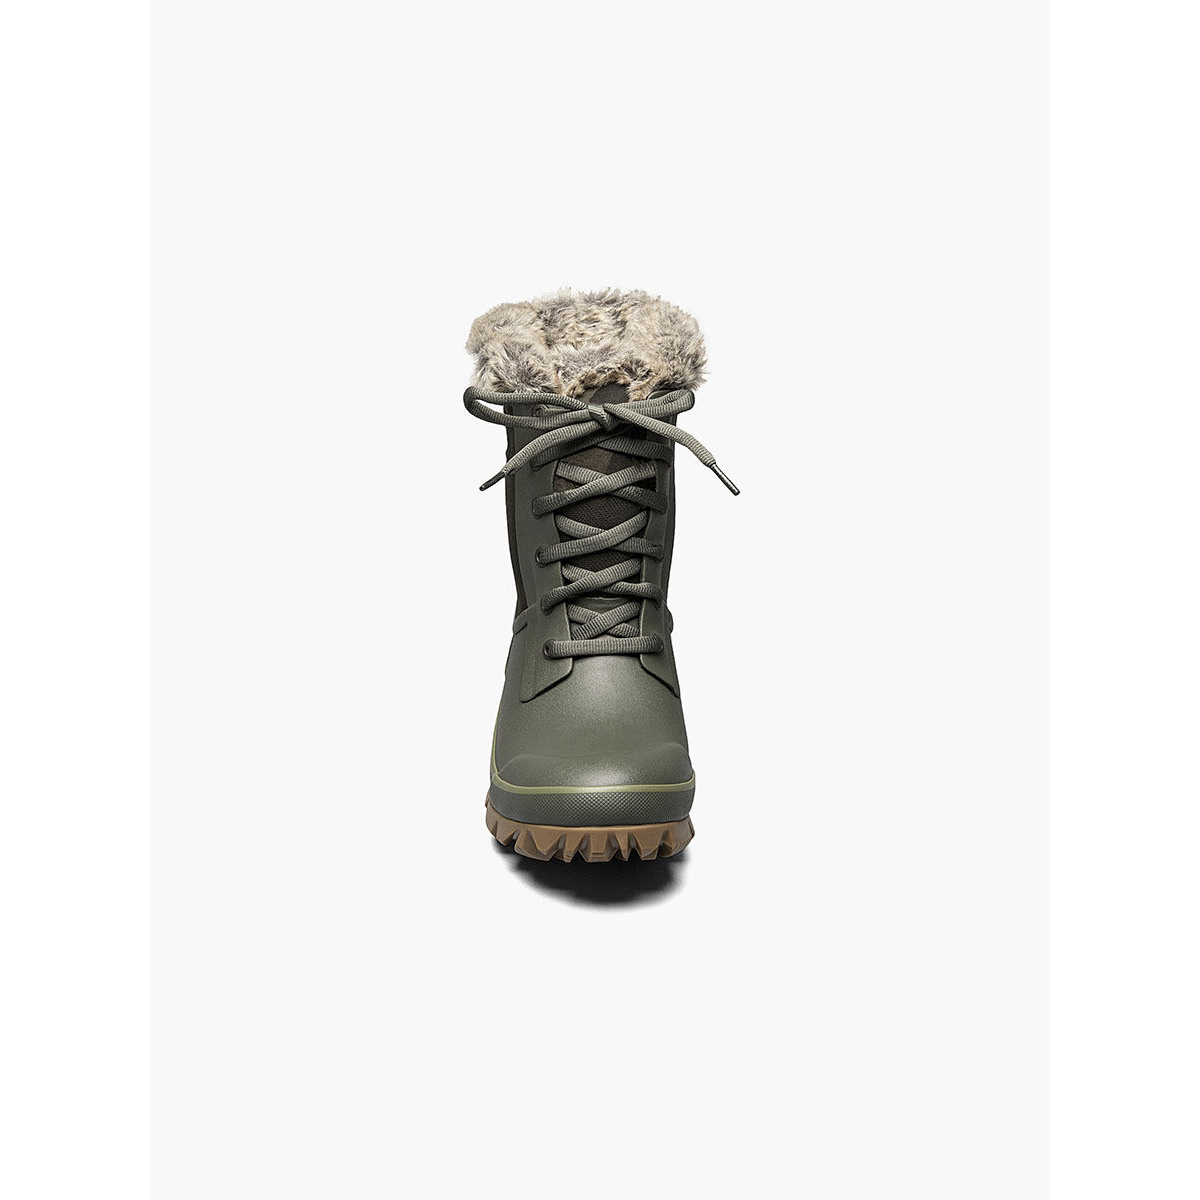 BOGS Women's Arcata Tontal Camo Waterproof Lace Up Snow Boots Dark Green - 72693-301 - Dark Green, 6